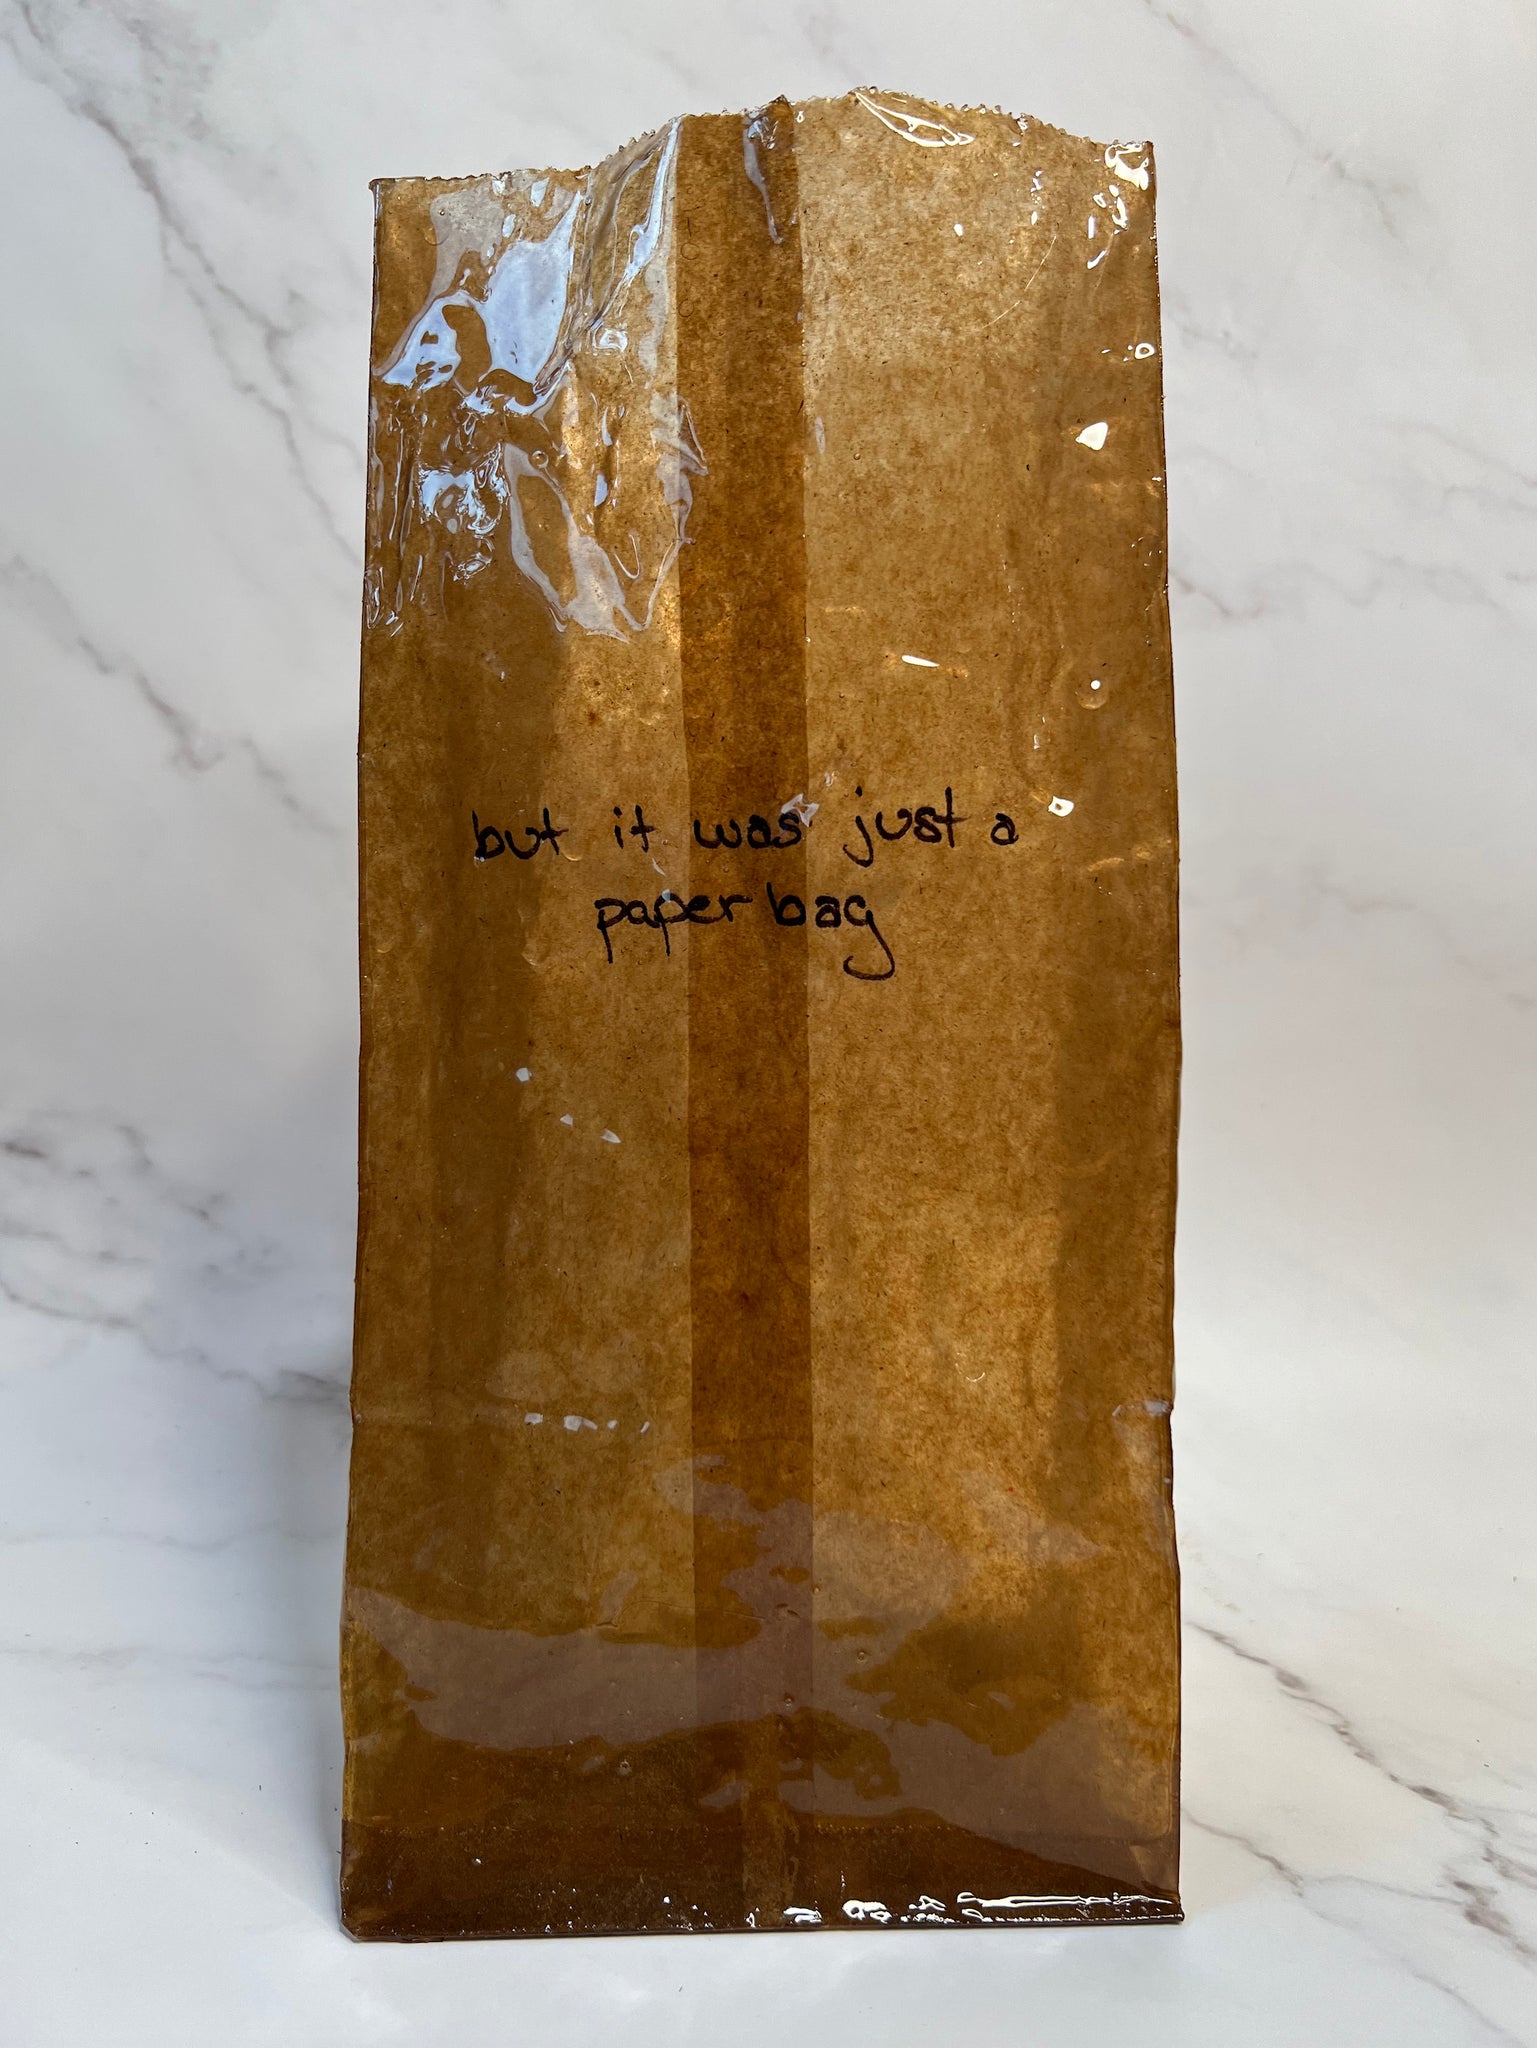 Atlantic City Brown Paper Bag Vase WITH Lyrics on both sides